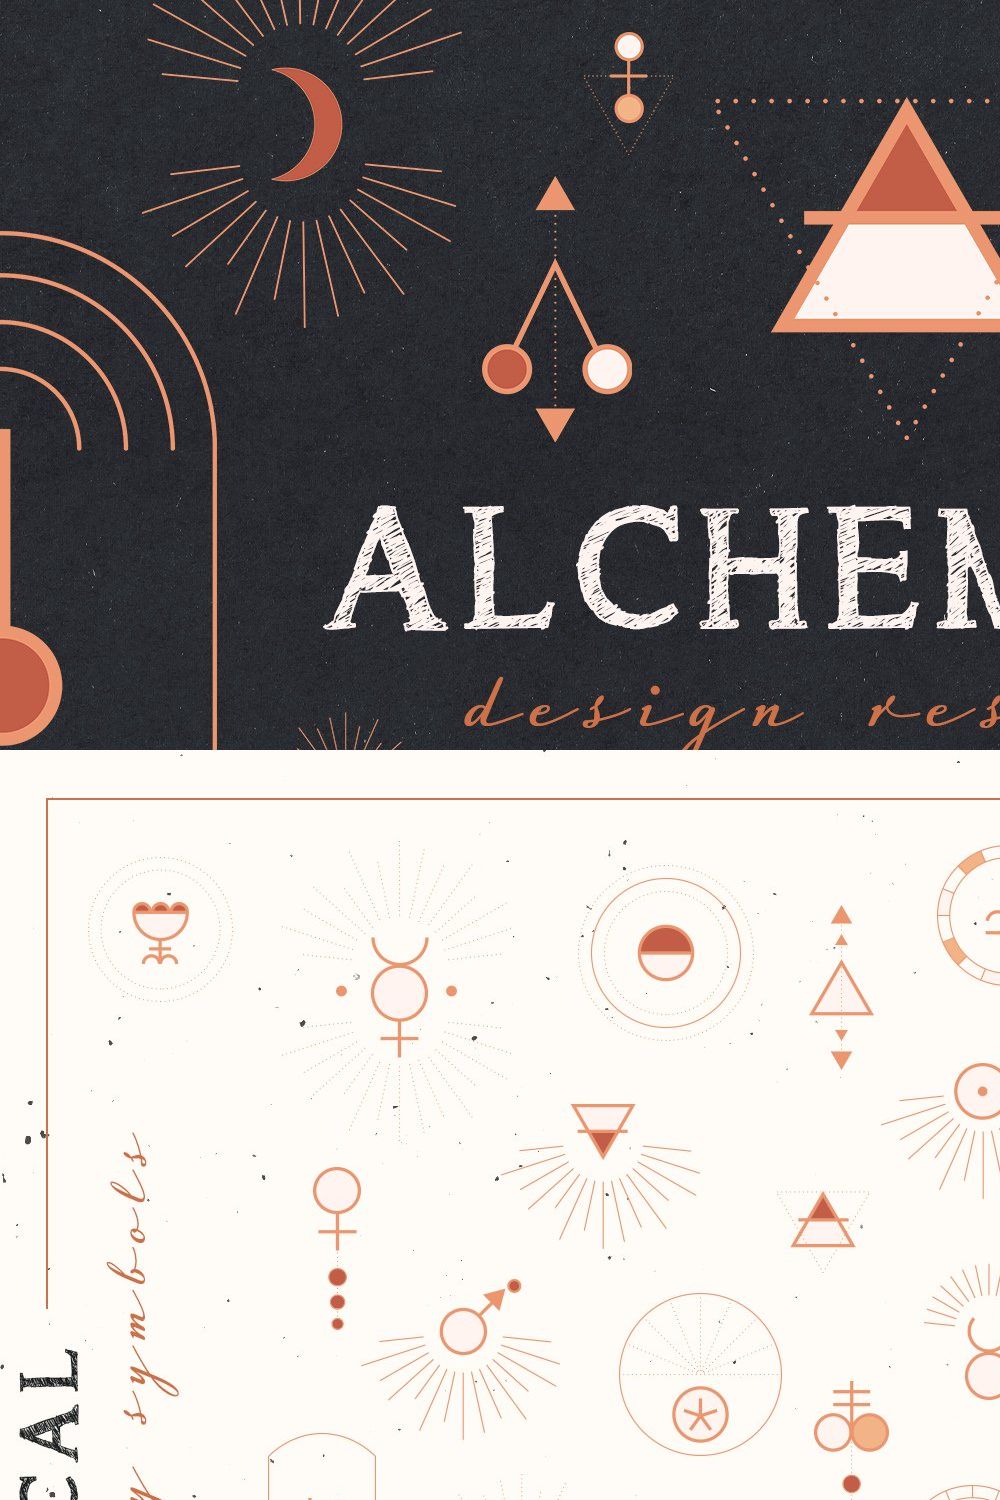 Alchemical Design Resources pinterest preview image.